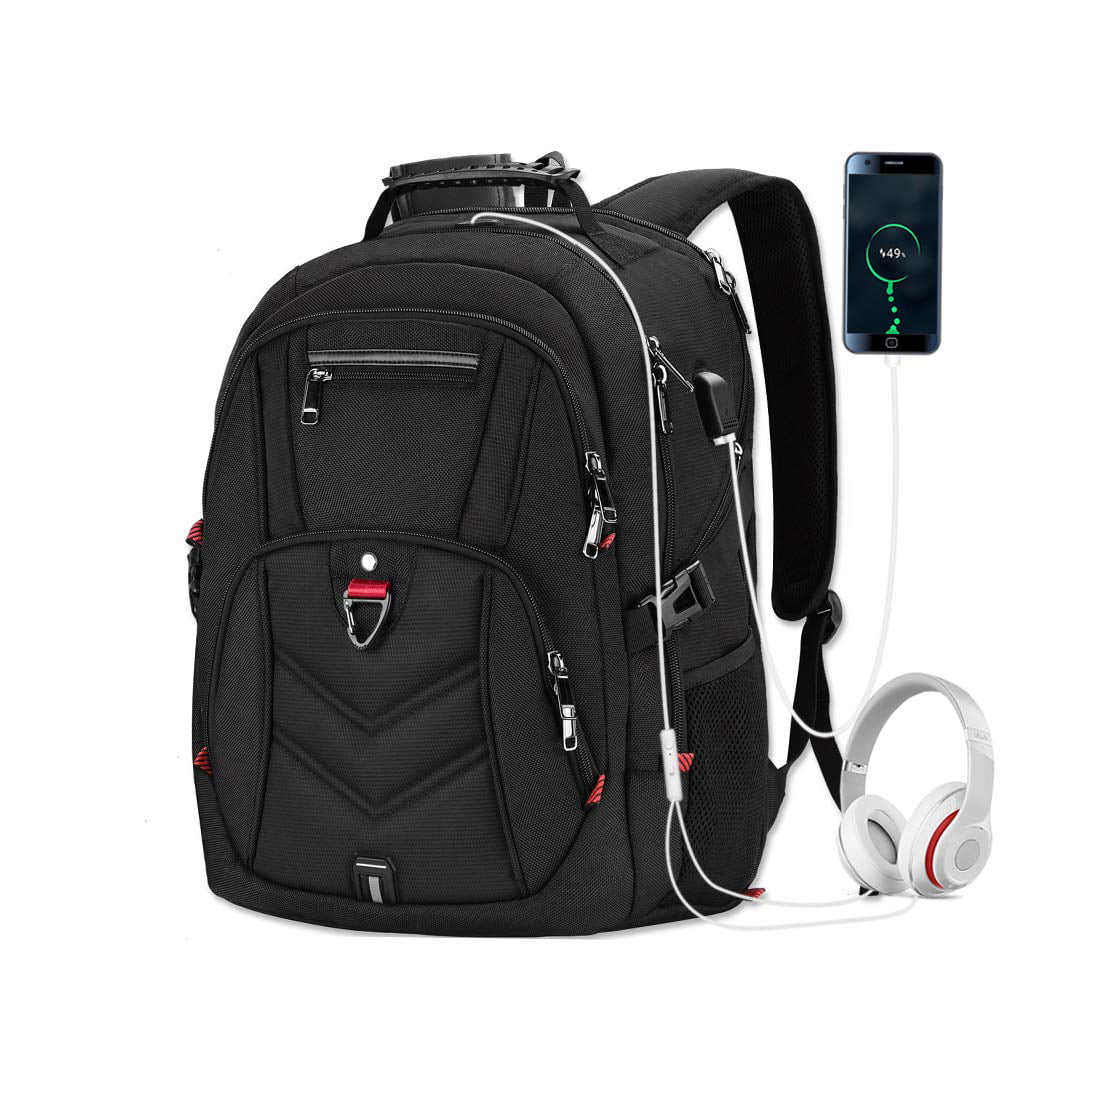 Ha-Rley Qui-Nn 17inch Durable Student Bookbag Laptop Backpack Travel Bag with USB Charging Port for Men Women Boys Girls 